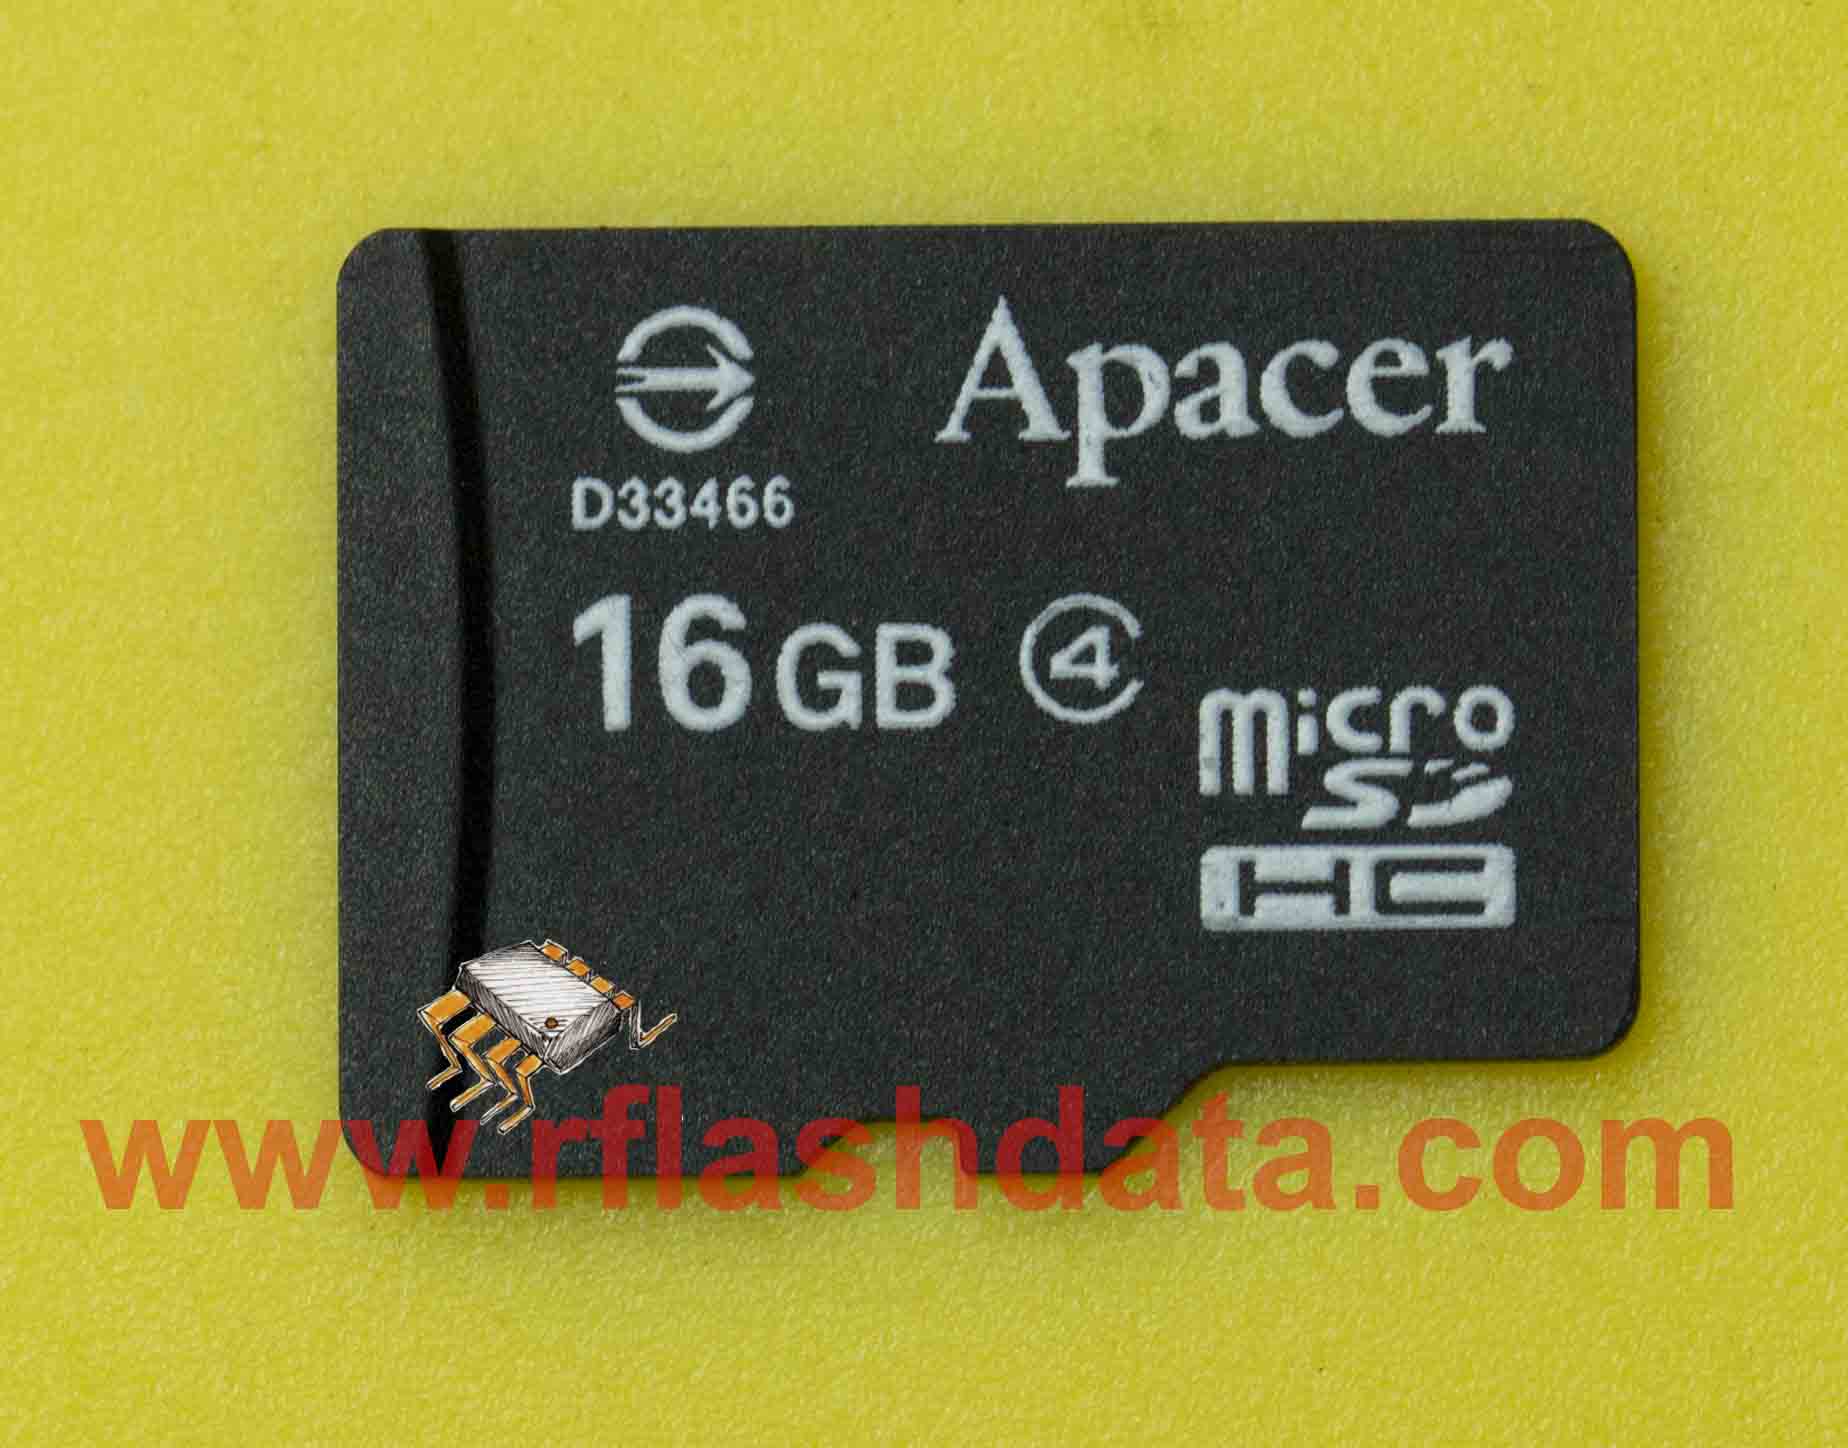 apacer microSD